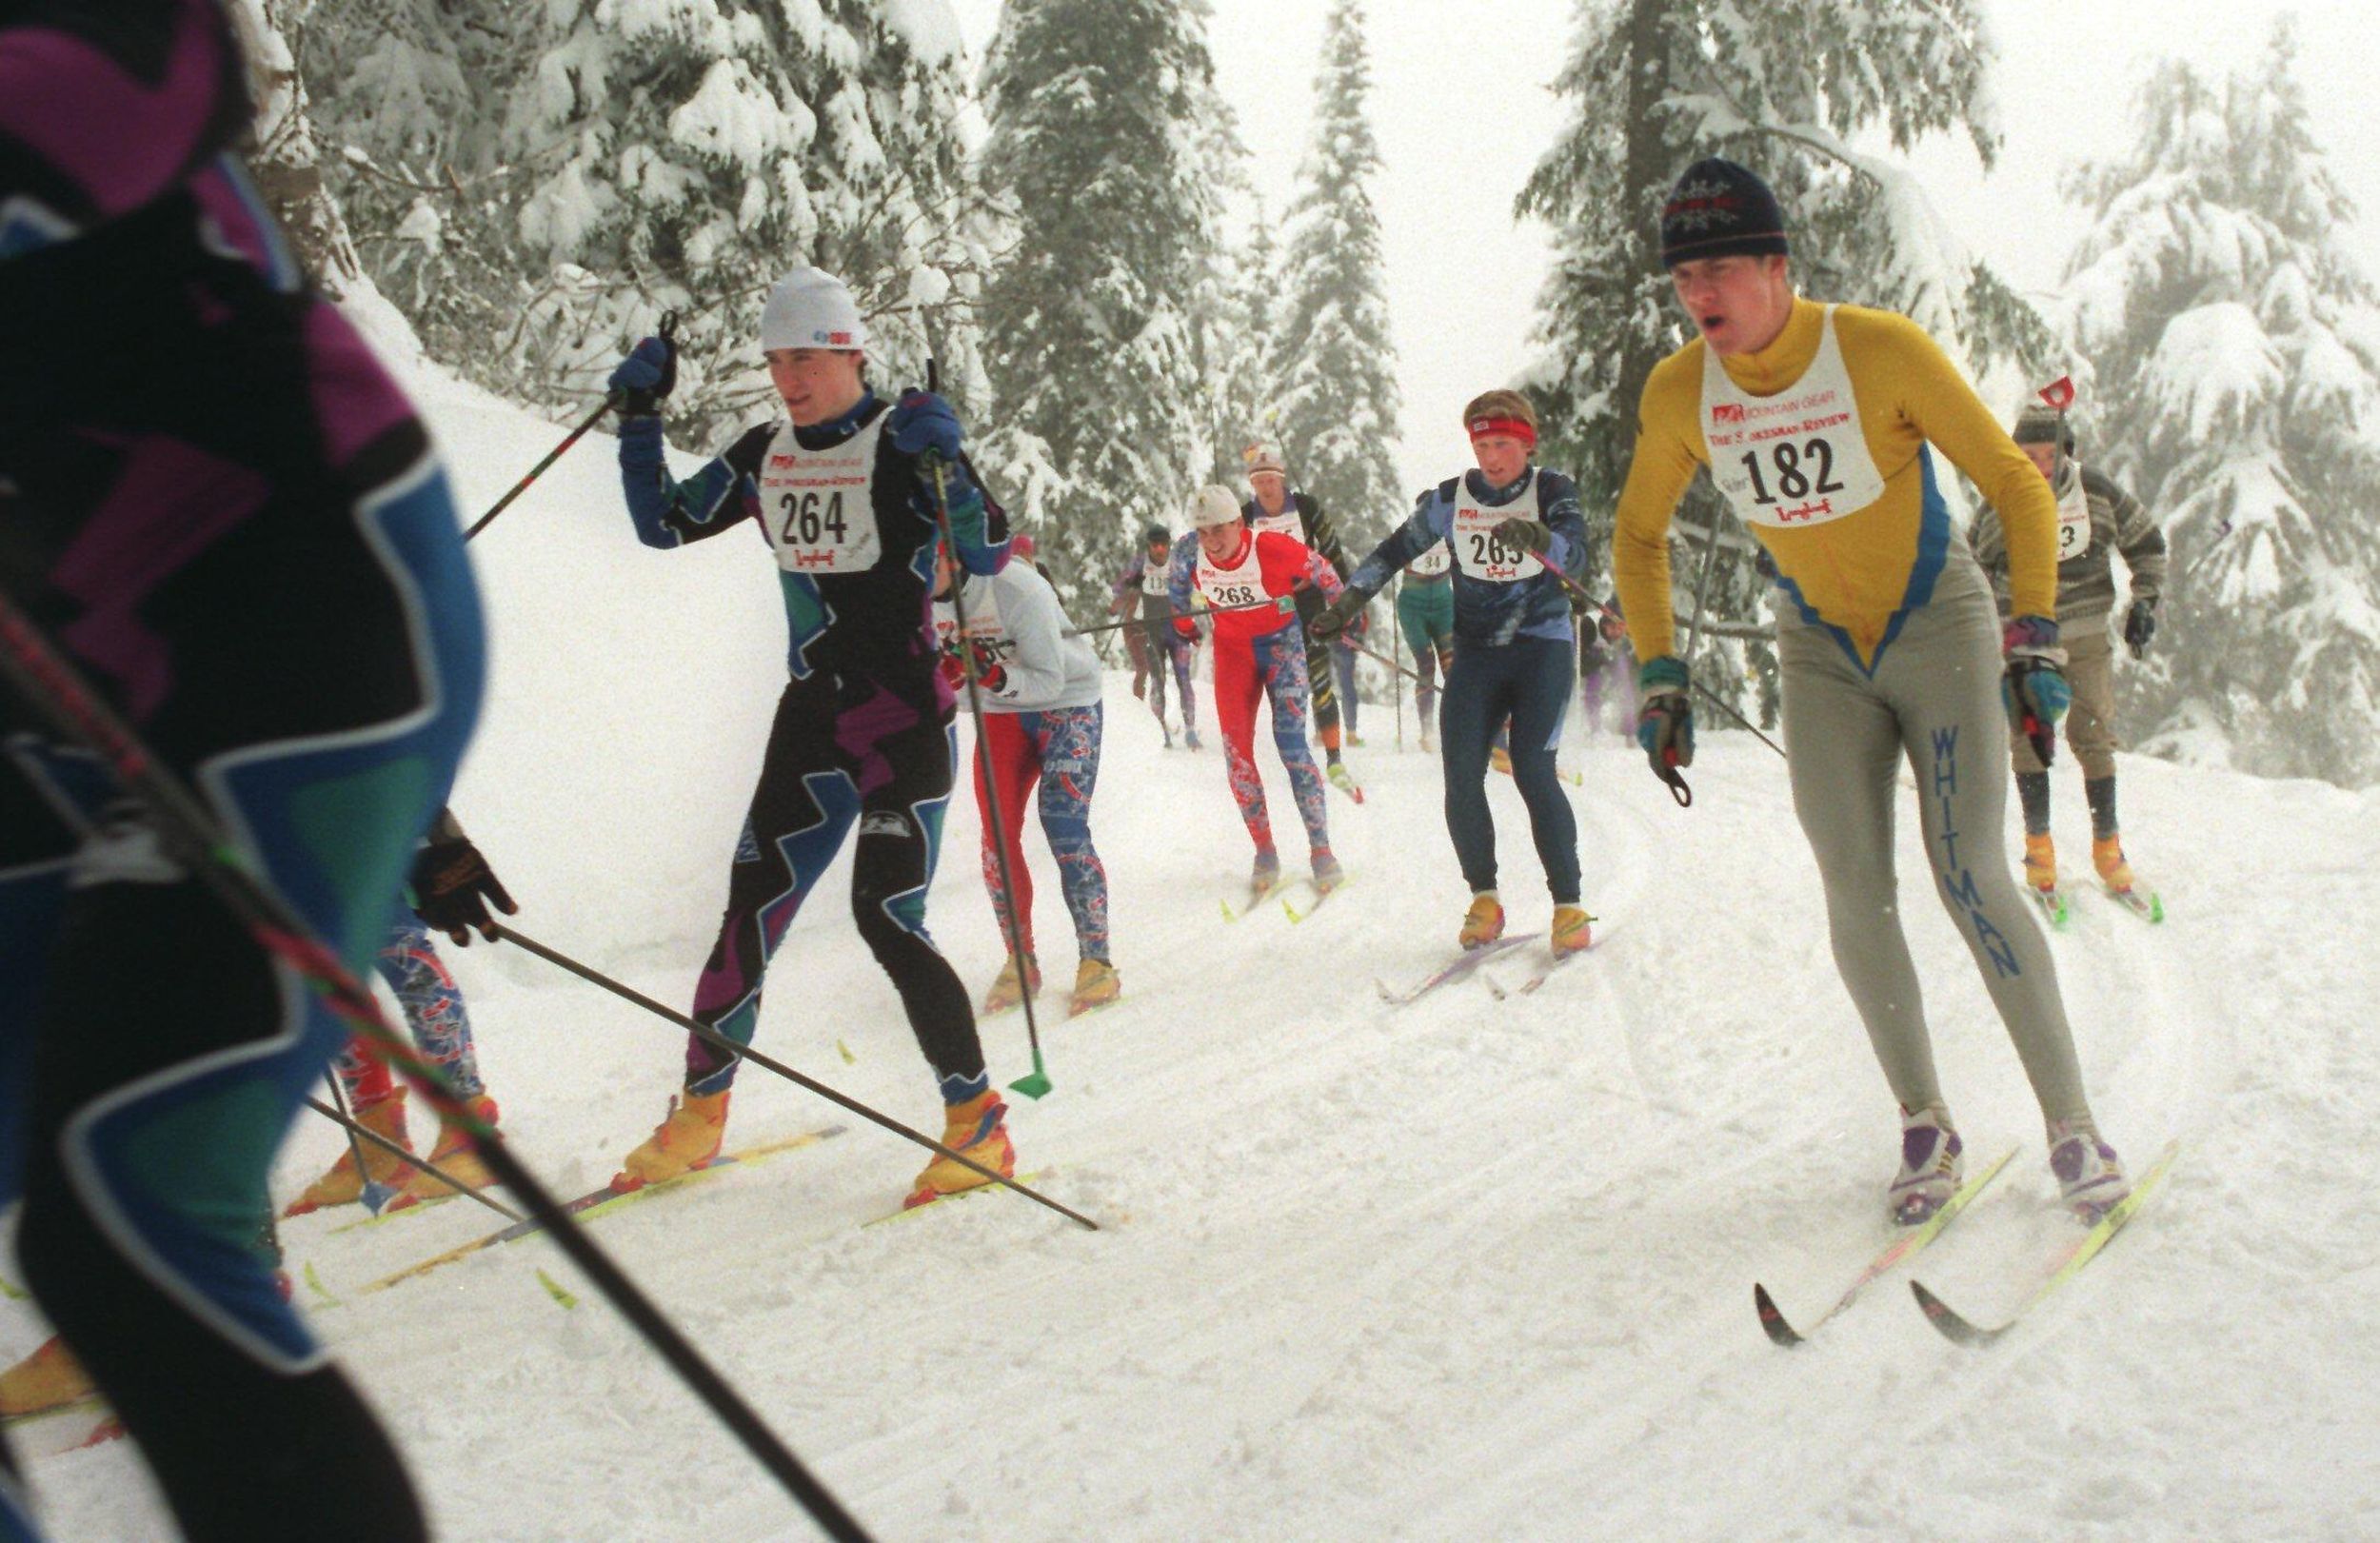 Region’s premier crosscountry ski race, Spokane Langlauf, turning 40